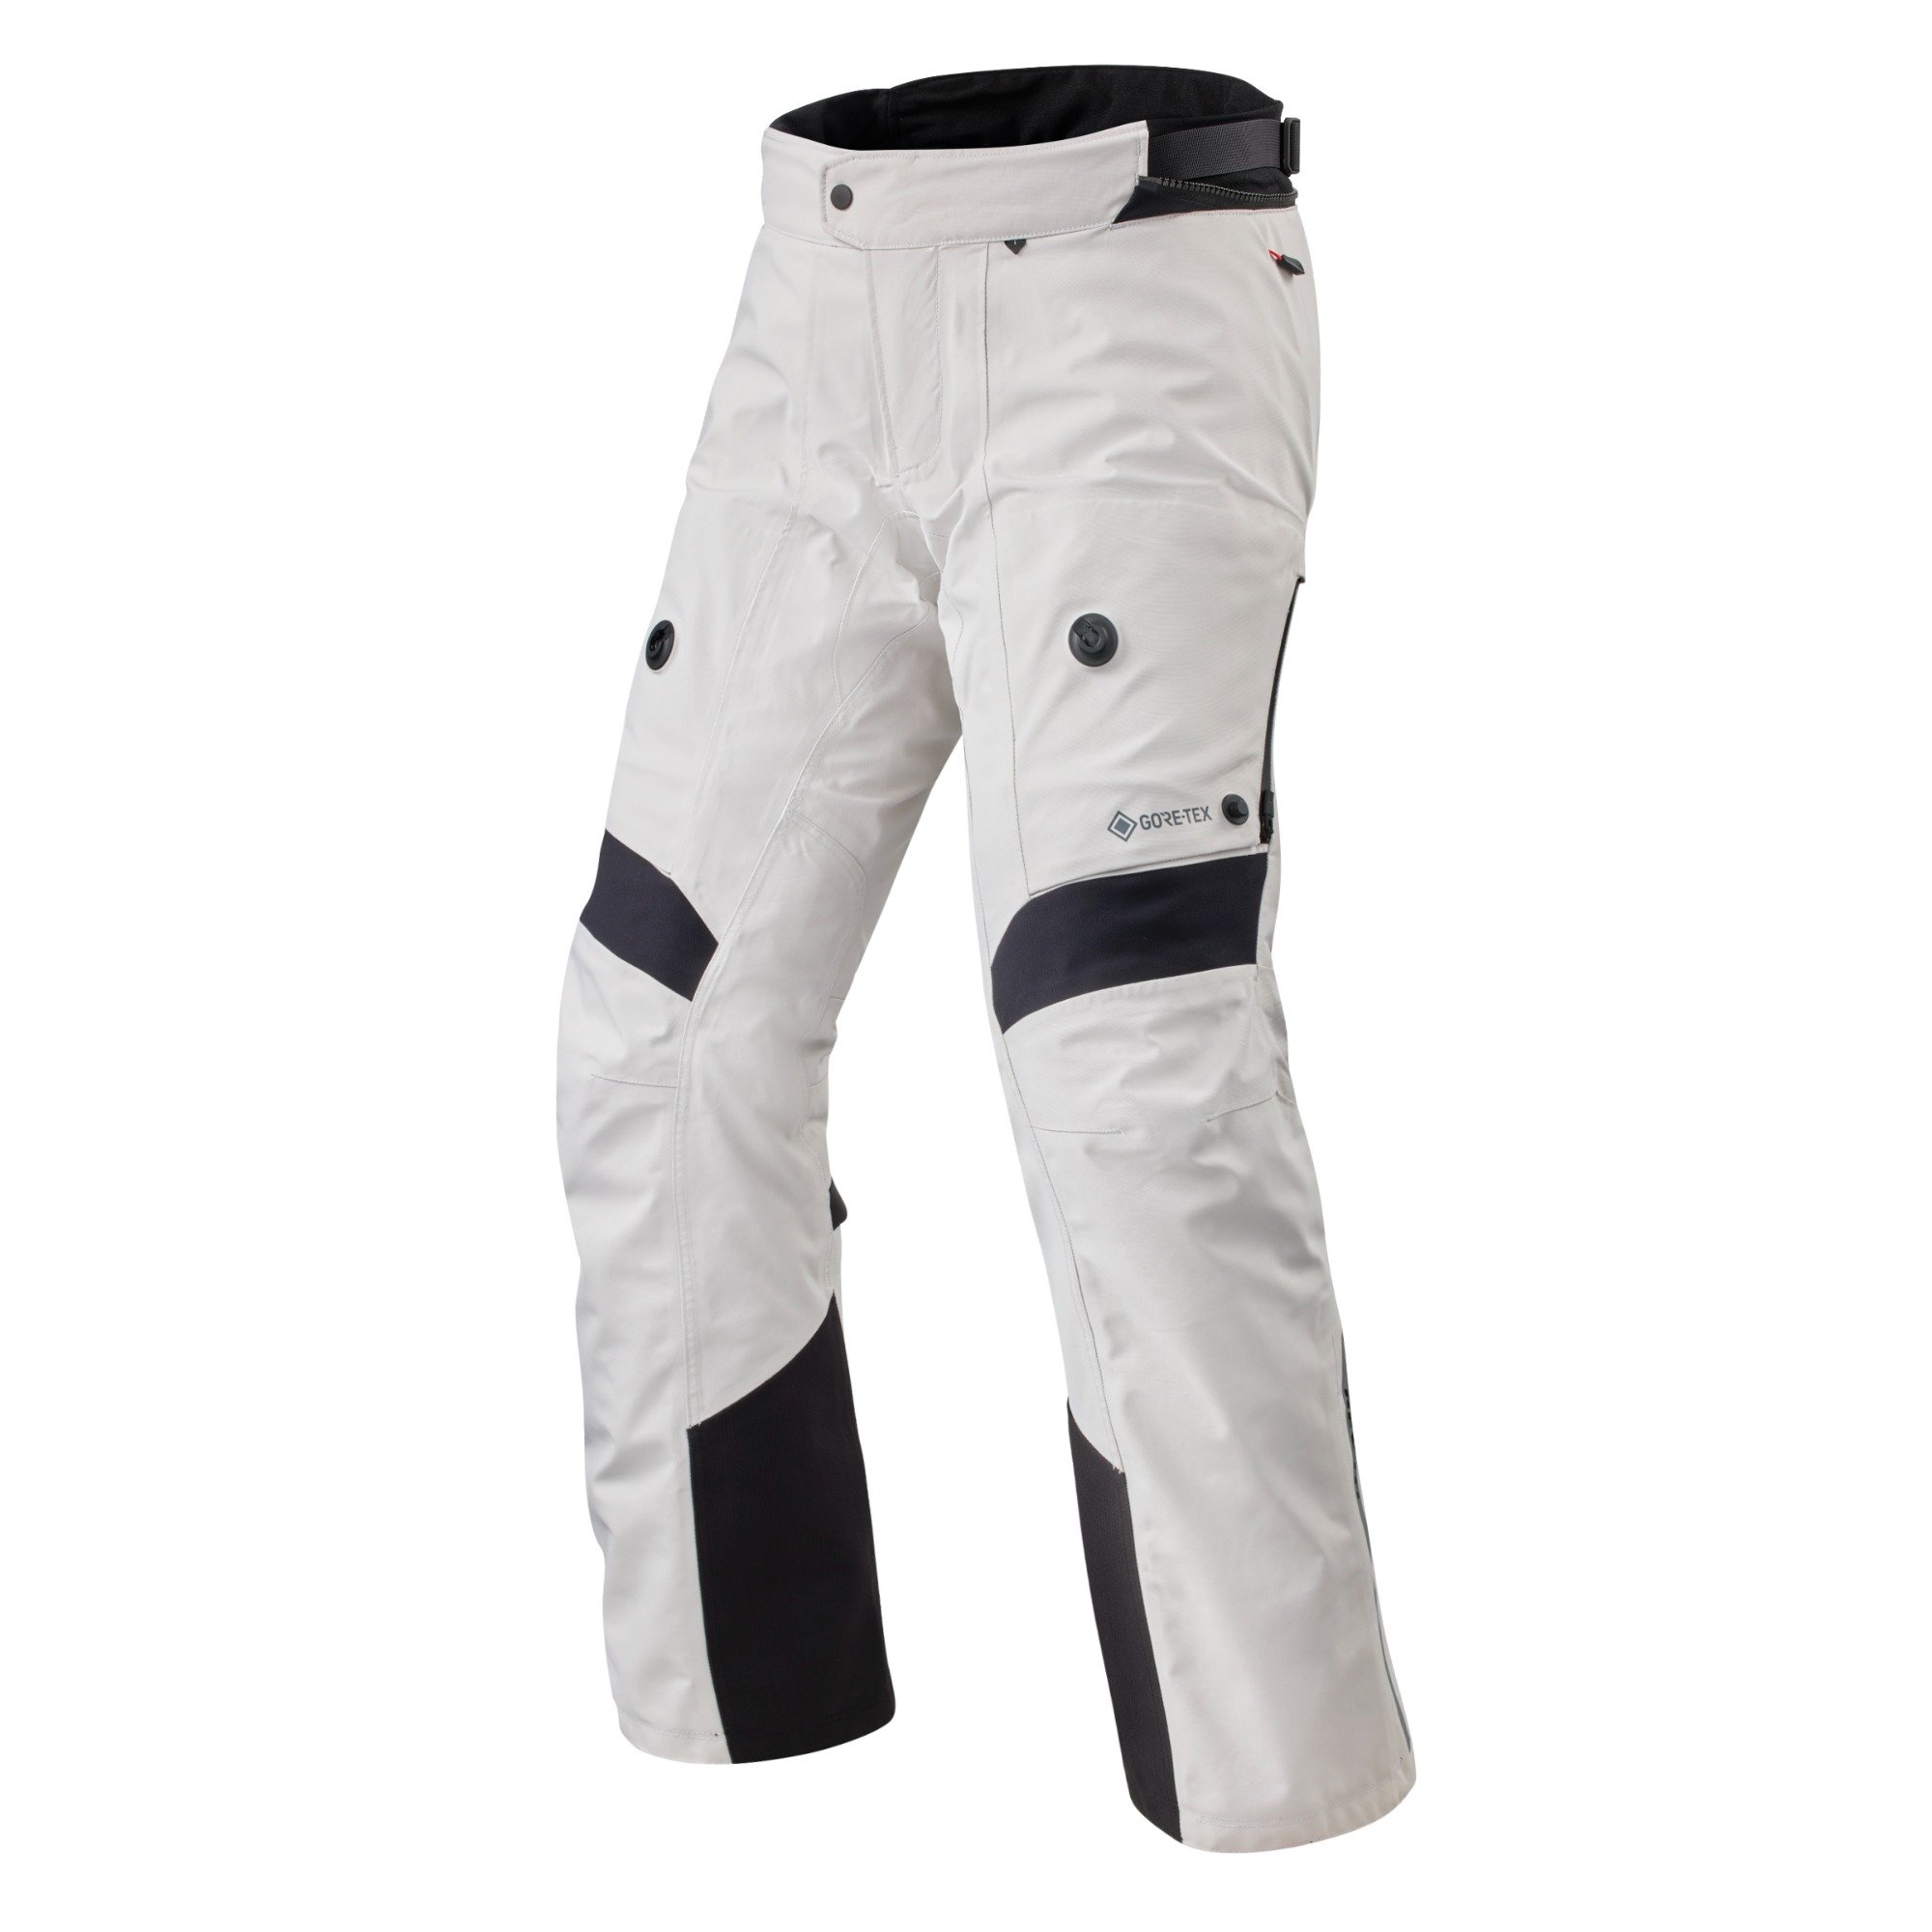 Image of REV'IT! Pants Poseidon 3 GTX Silver Black Standard Motorcycle Pants Talla S